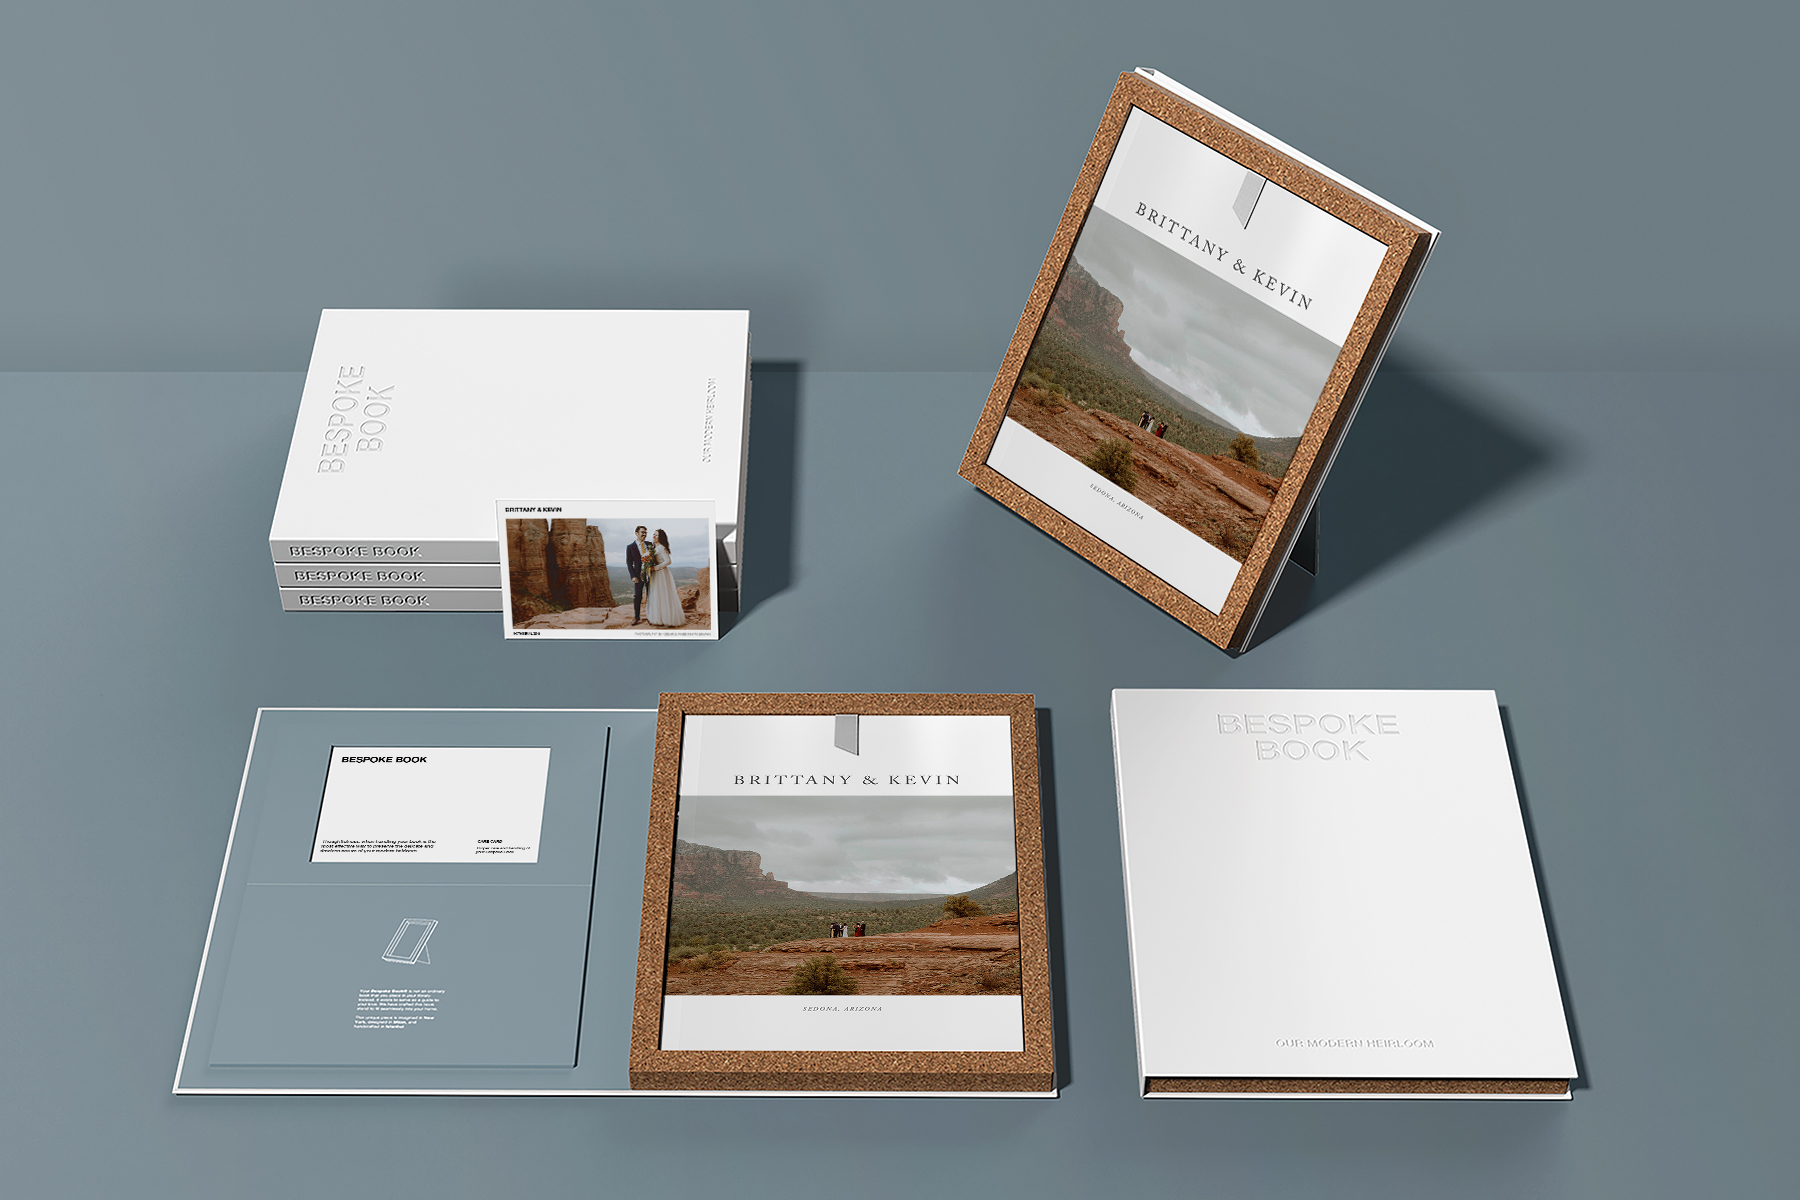 vve.design Creates a Multi-Purpose Rigid Book Packaging